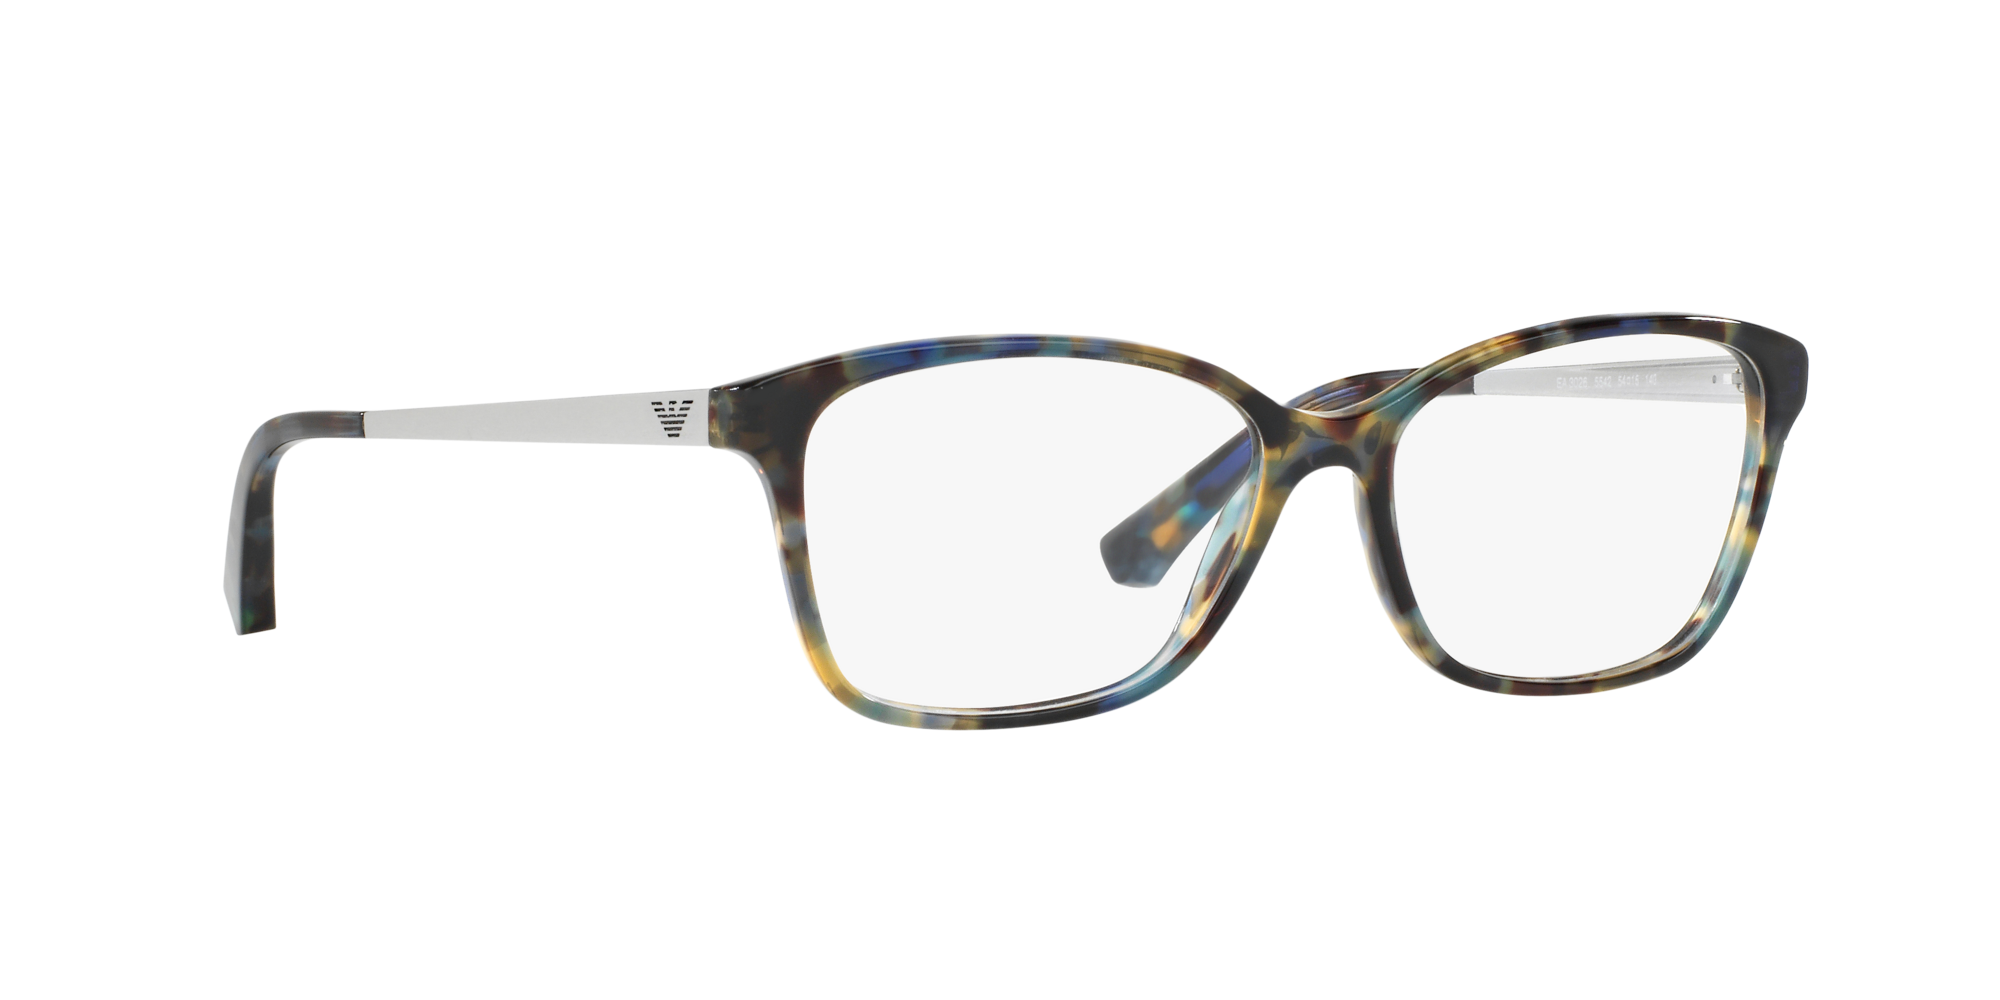 Angle_Right01 Emporio Armani EA 3026 Glasses Transparent / Tortoise Shell